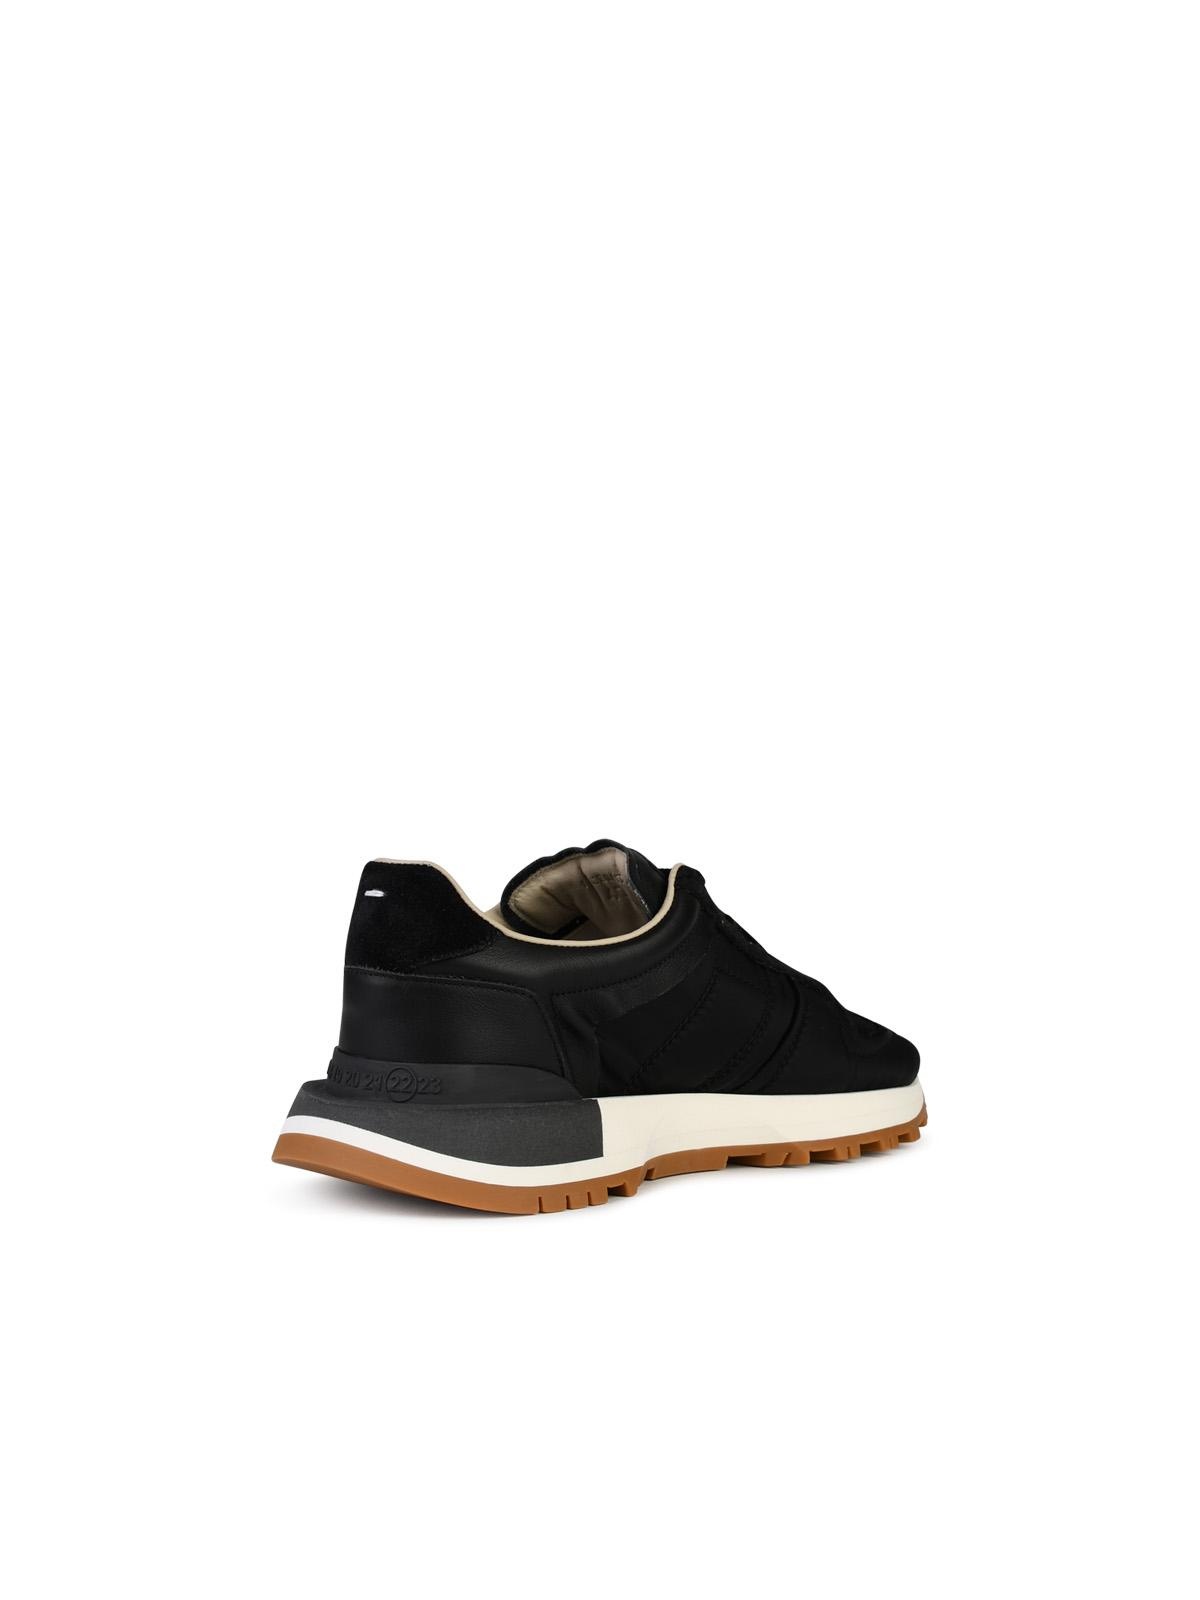 Maison Margiela '50-50' Black Leather Blend Sneakers Man - 3